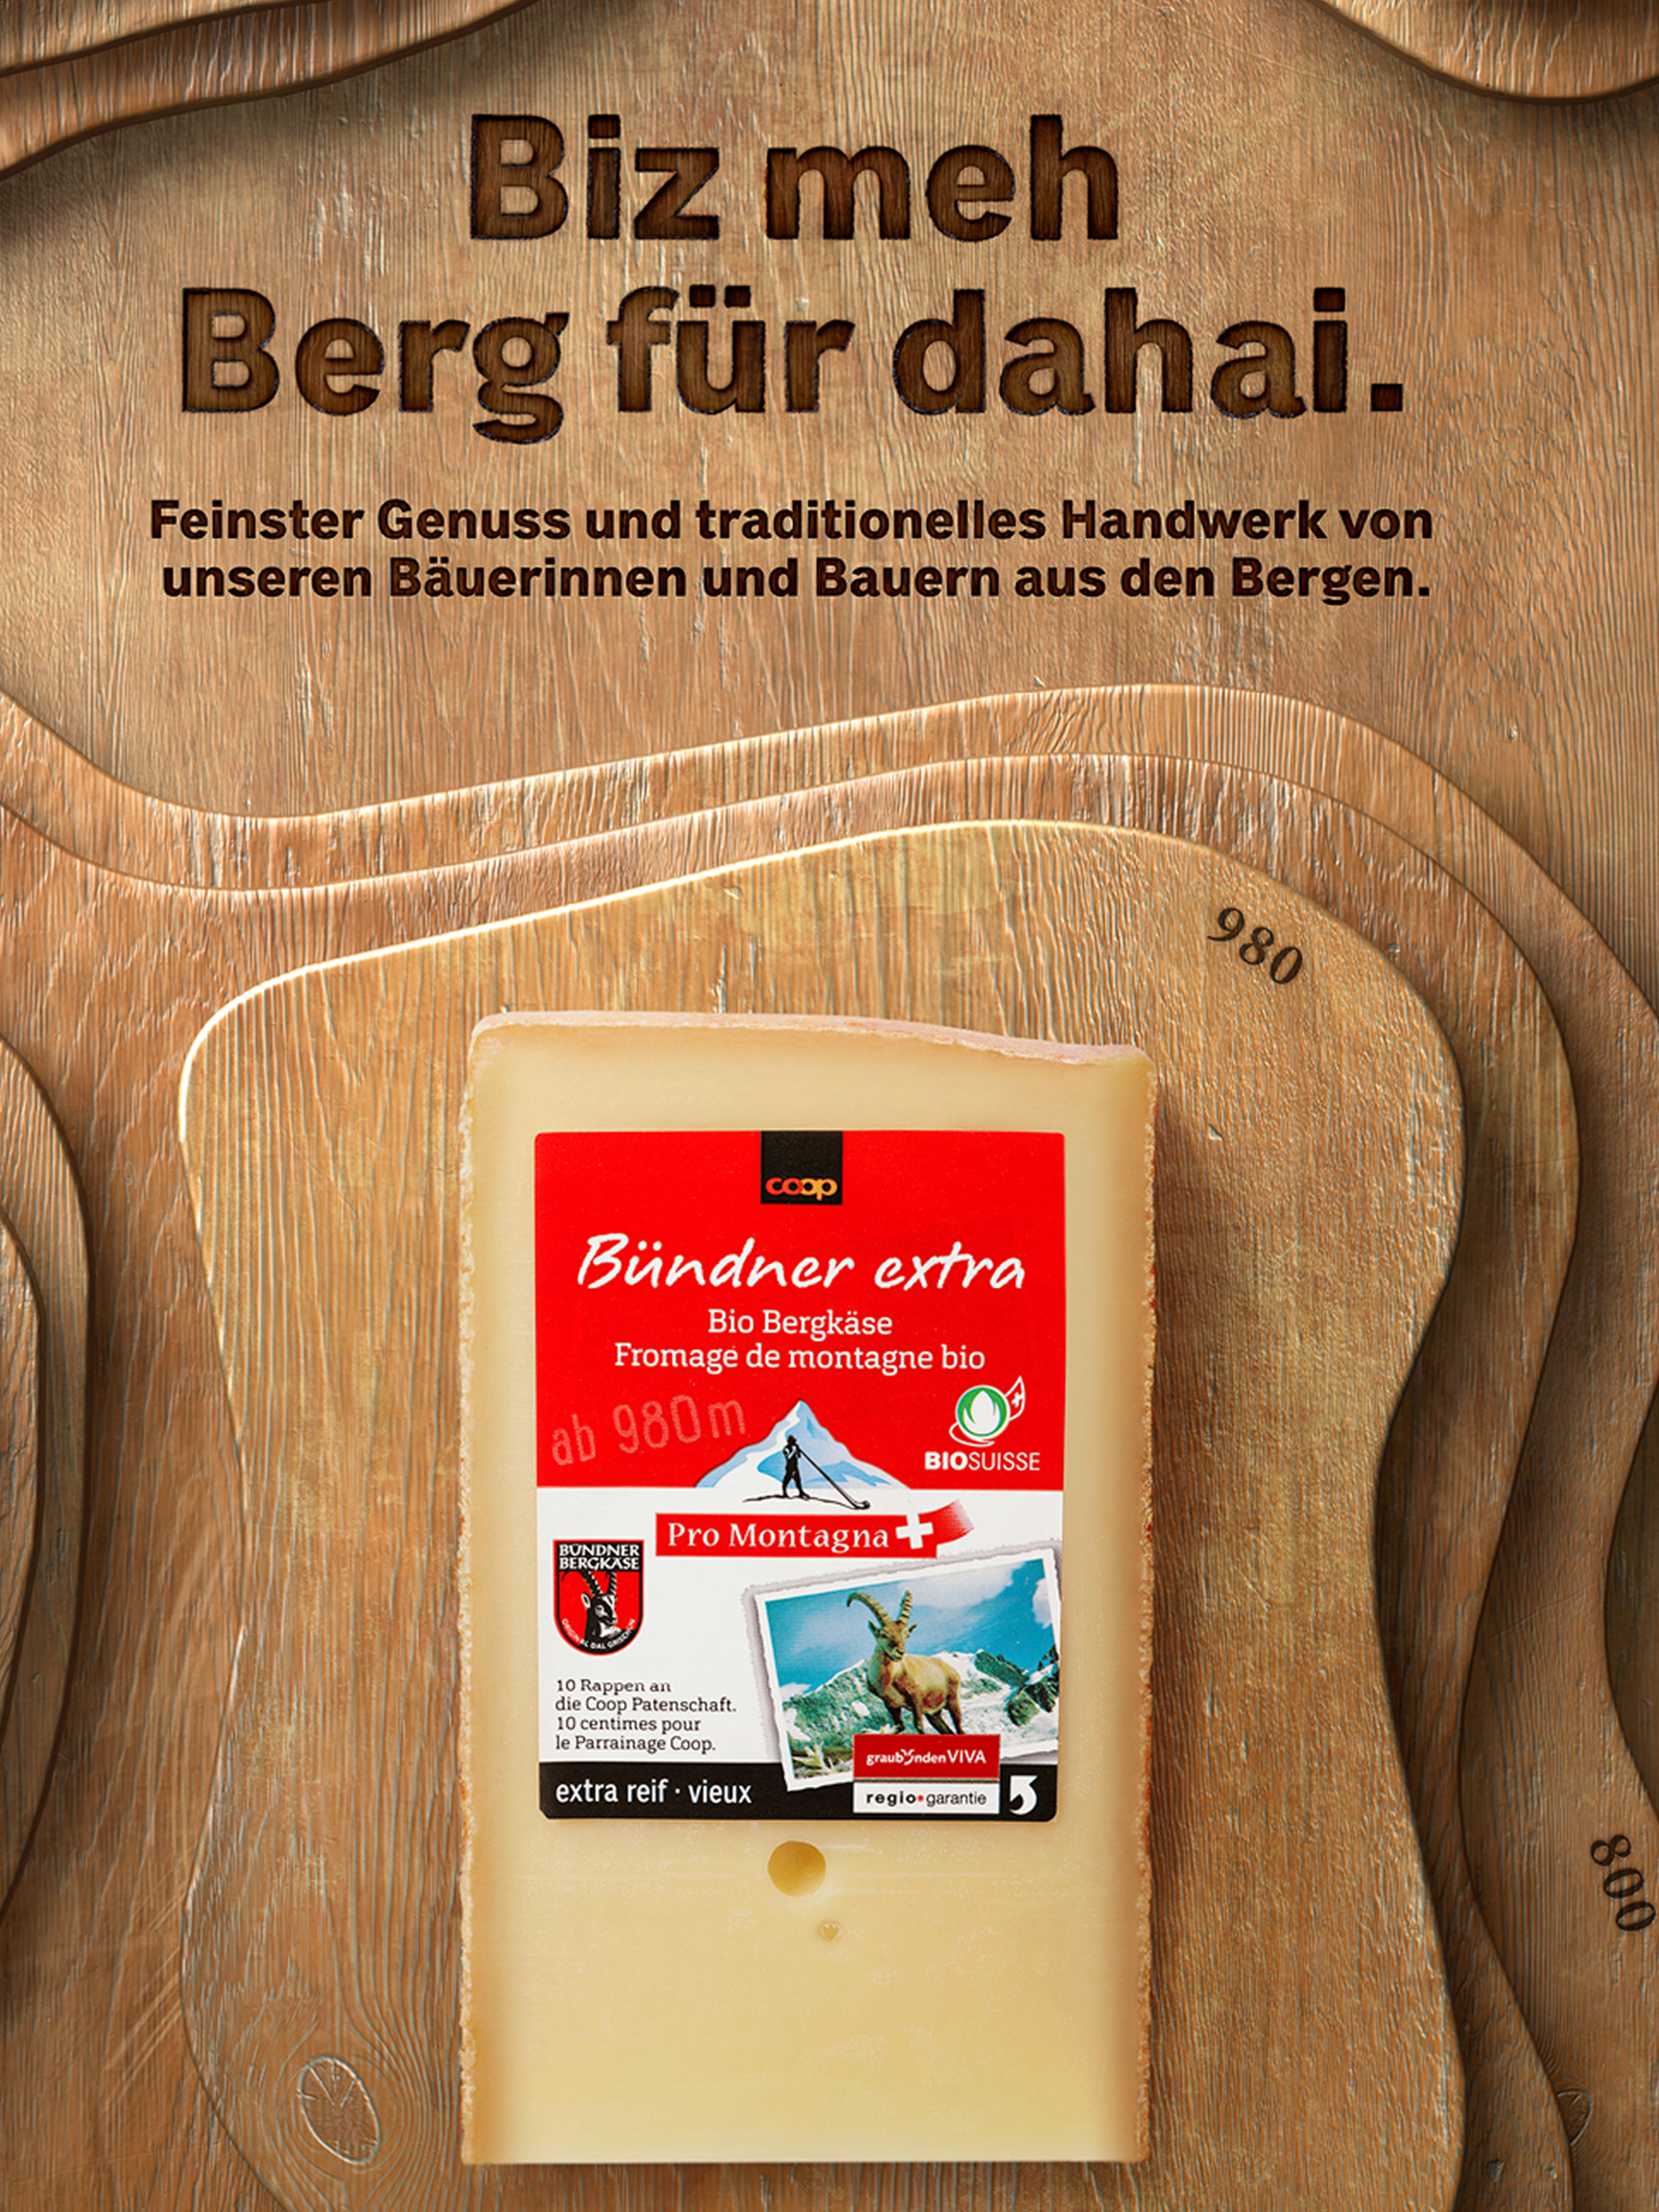 Picture of a bündner extra bio bergkäse on several wooden boards.